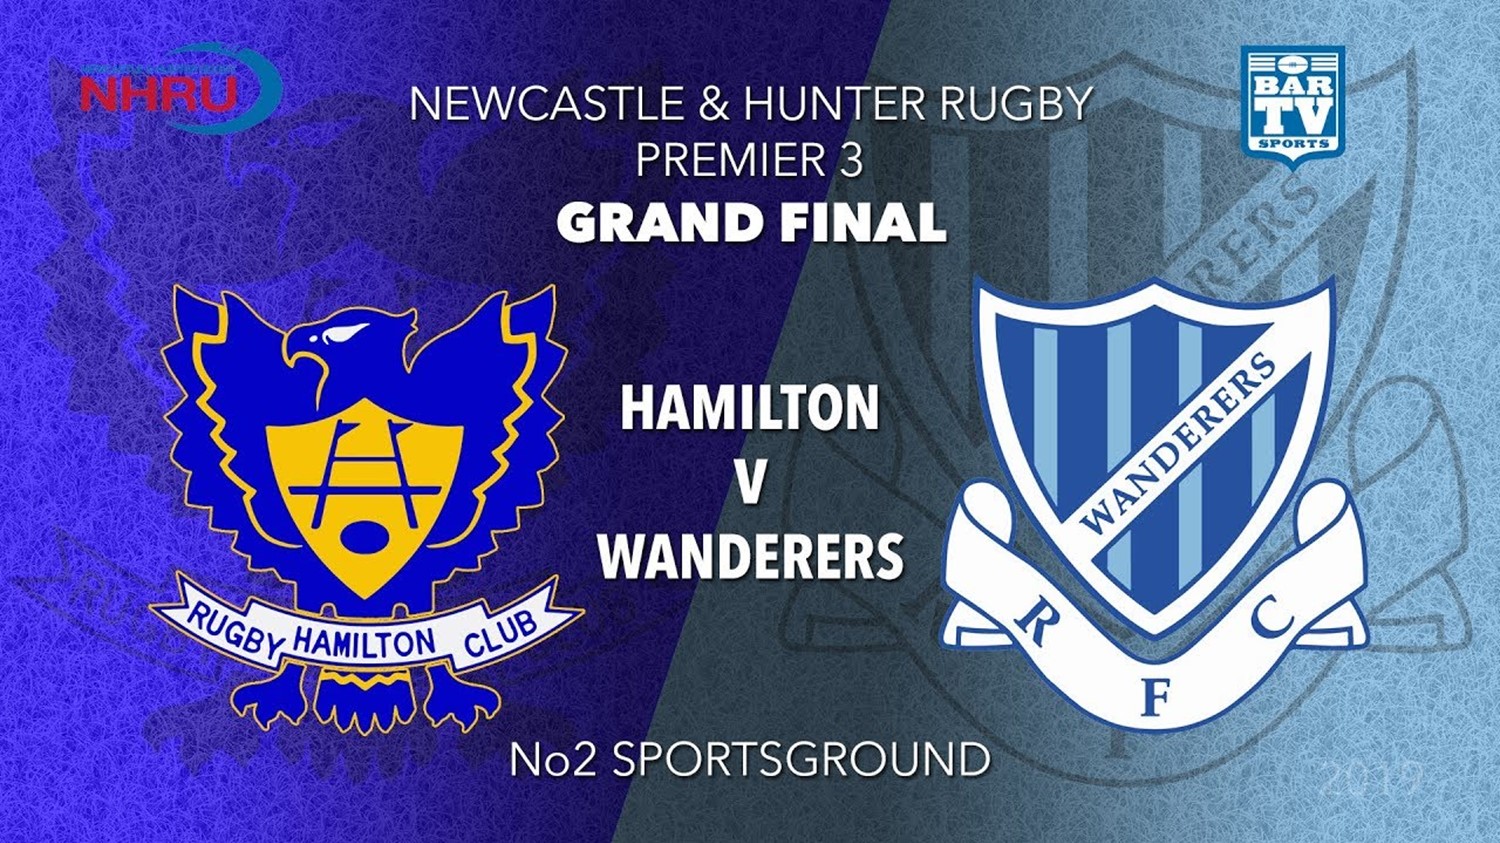 NHRU Grand Final - Premier 3 - Hamilton Hawks v Wanderers Minigame Slate Image